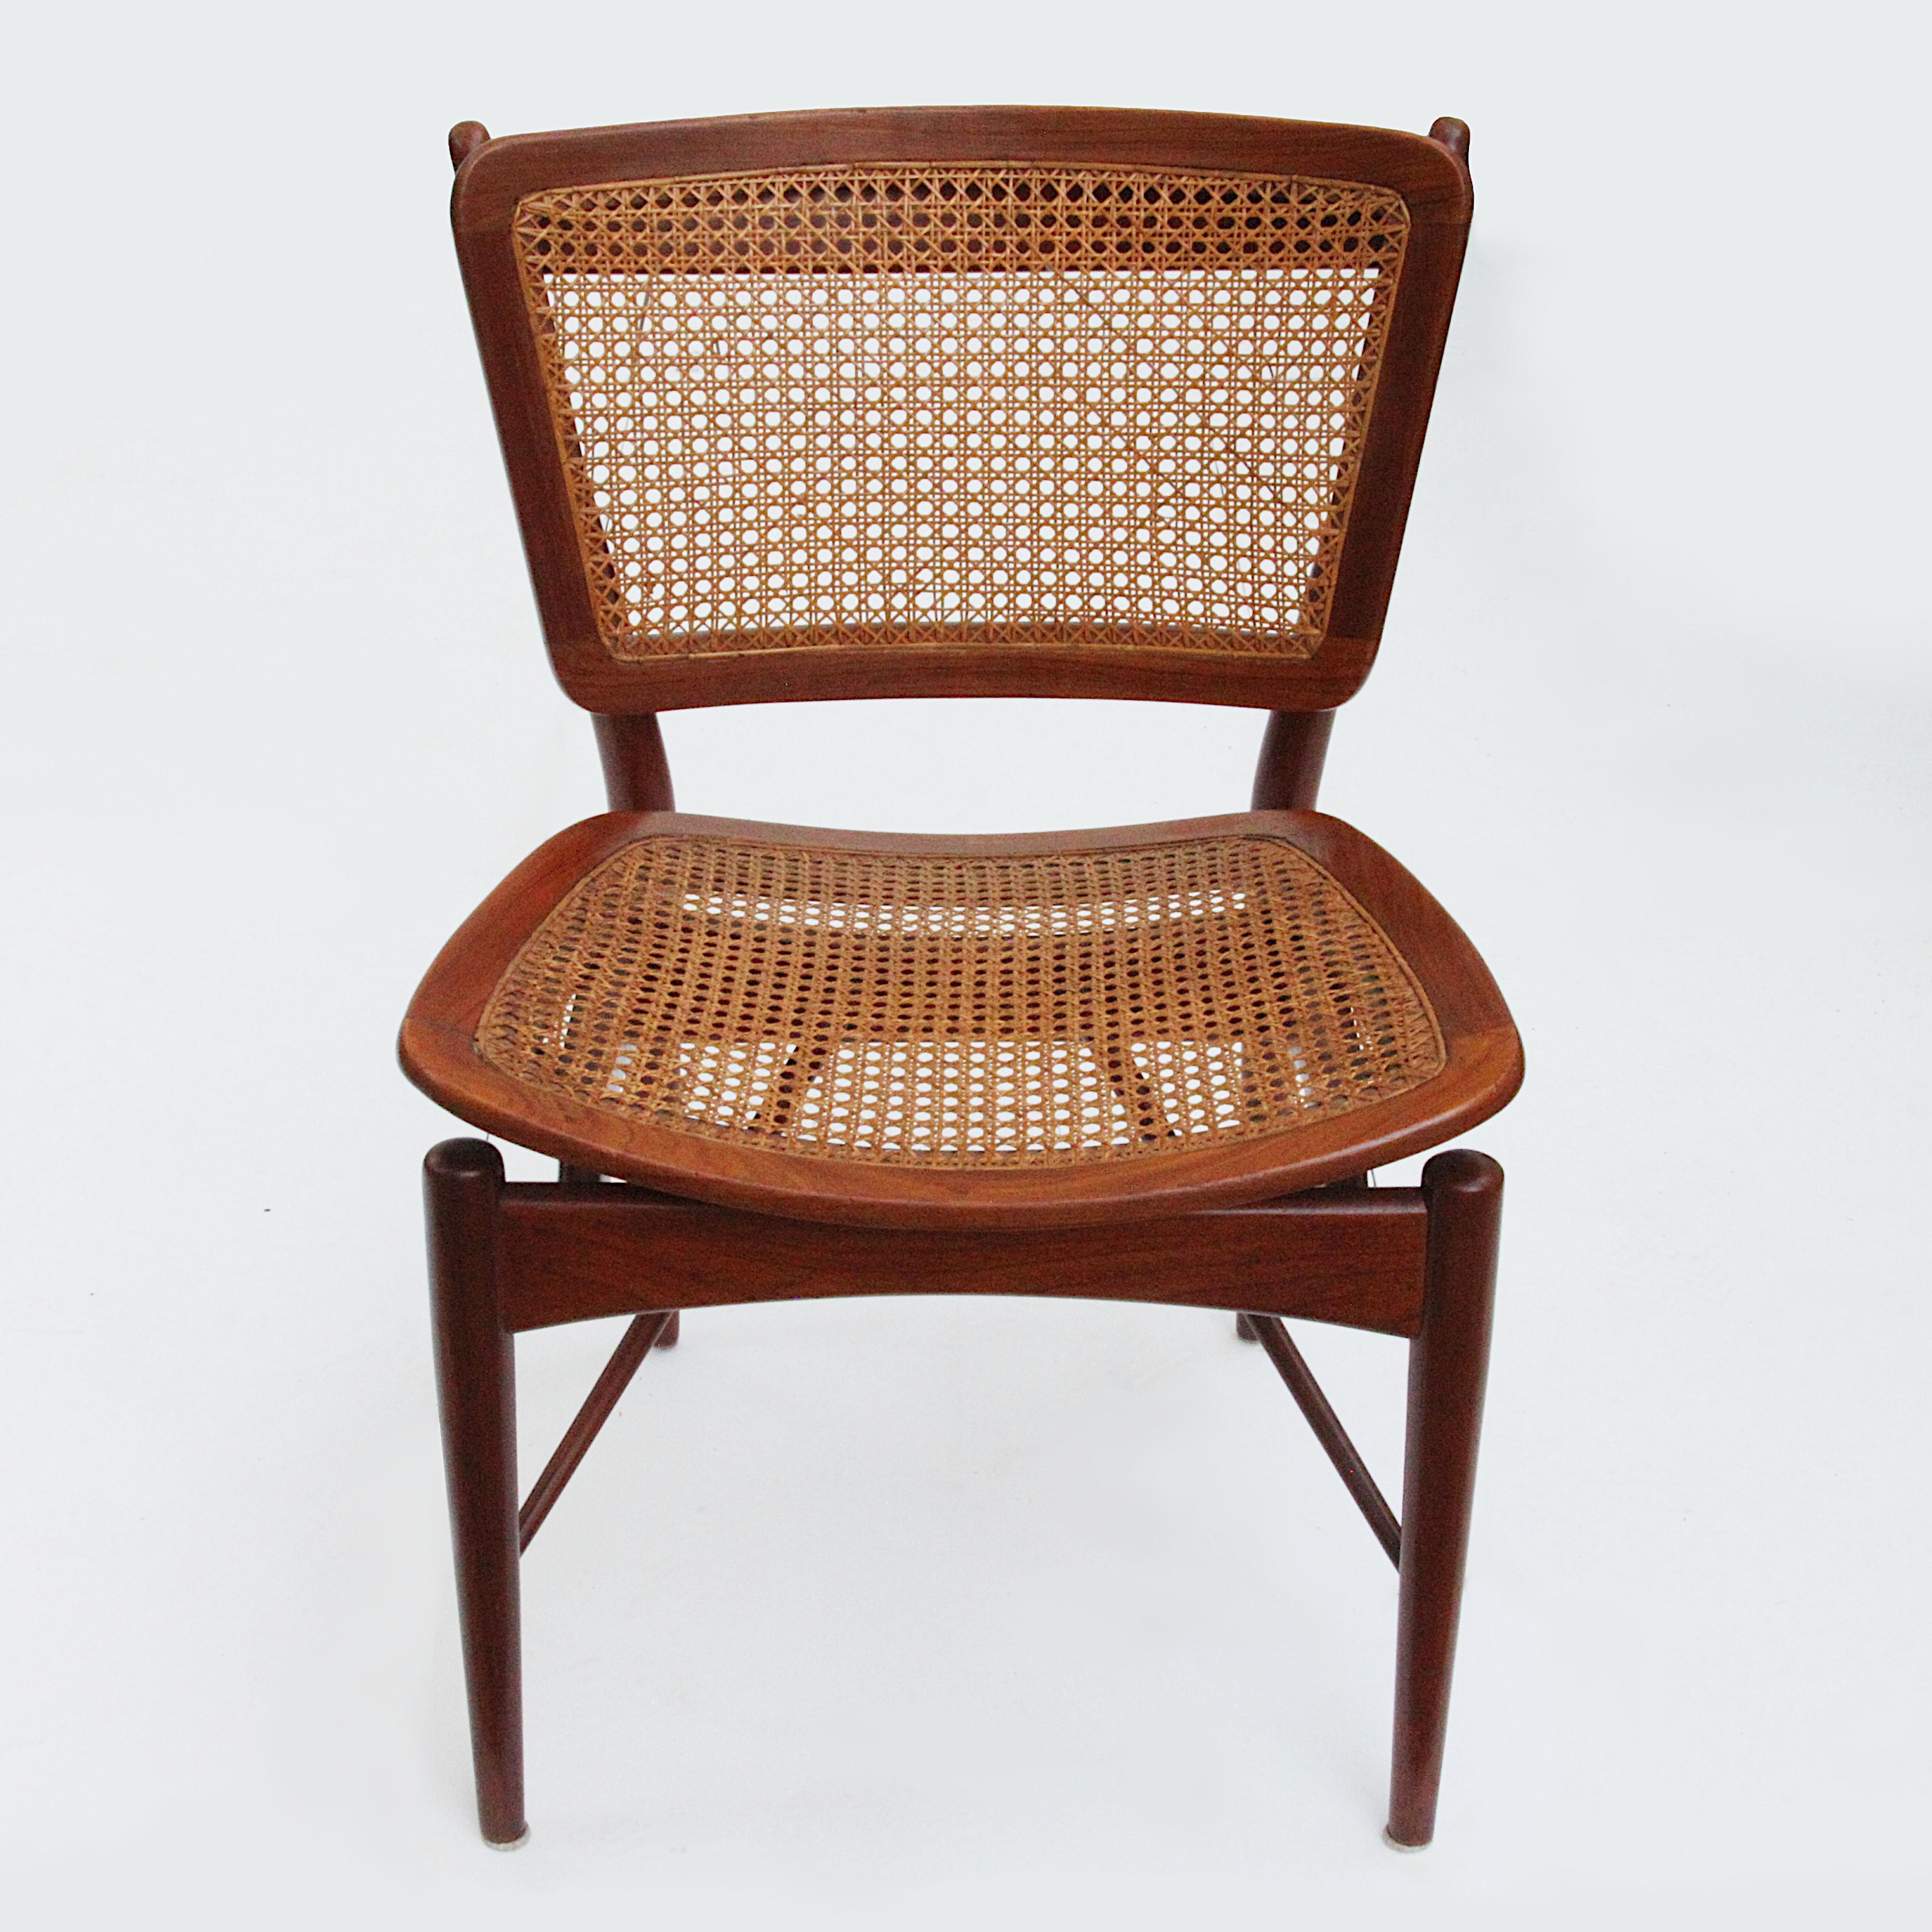 Woven Set of 4 Original Finn Juhl Model NV 51/403 Teak & Cane Dining Chairs by Baker